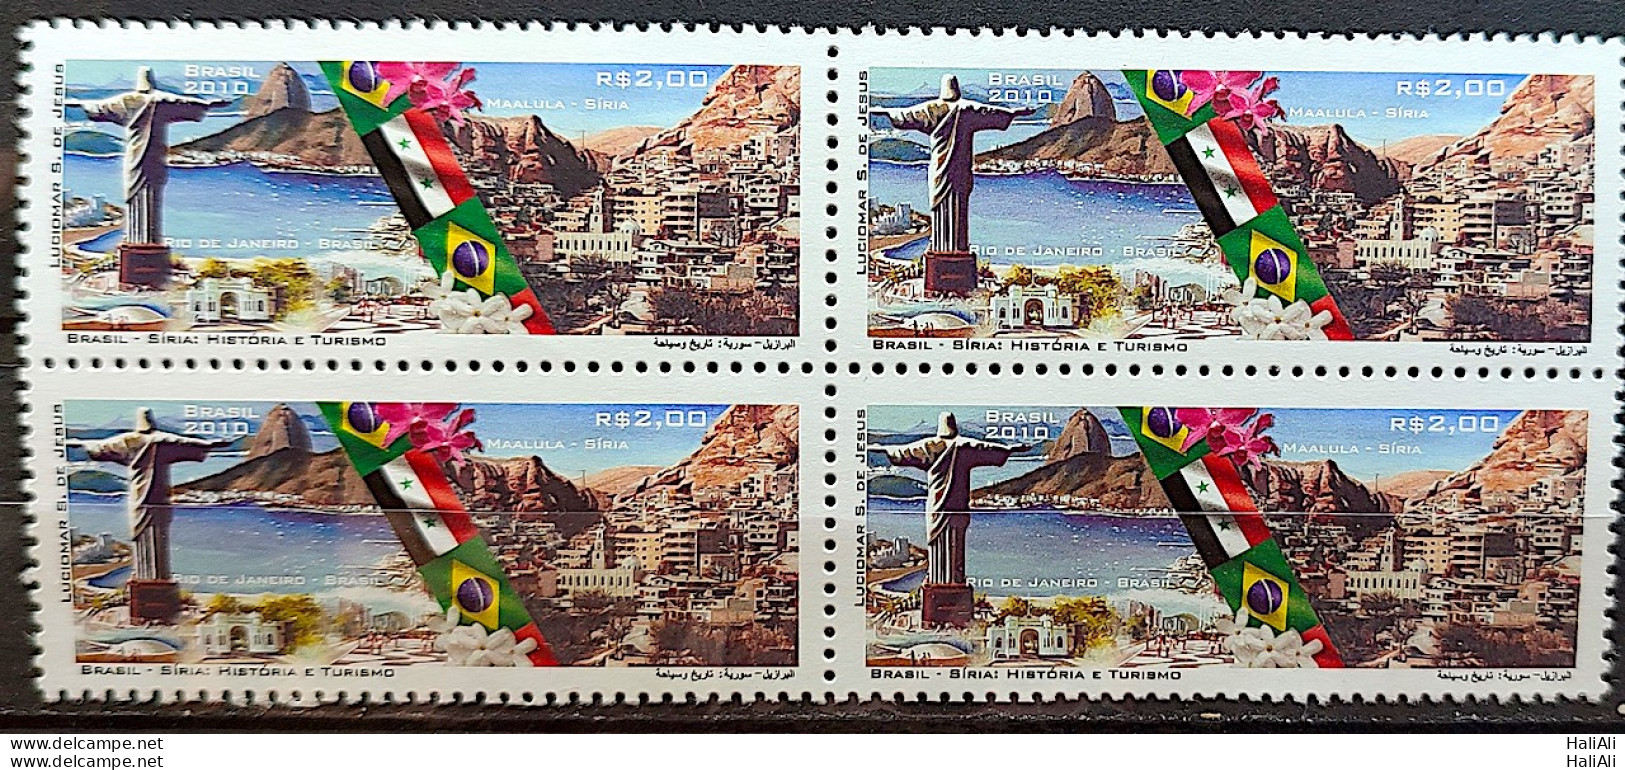 C 2983 Brazil Stamp Diplomatic Relations Syria Christ The Redeemer RJ Flag 2010 Block Of 4 - Ungebraucht